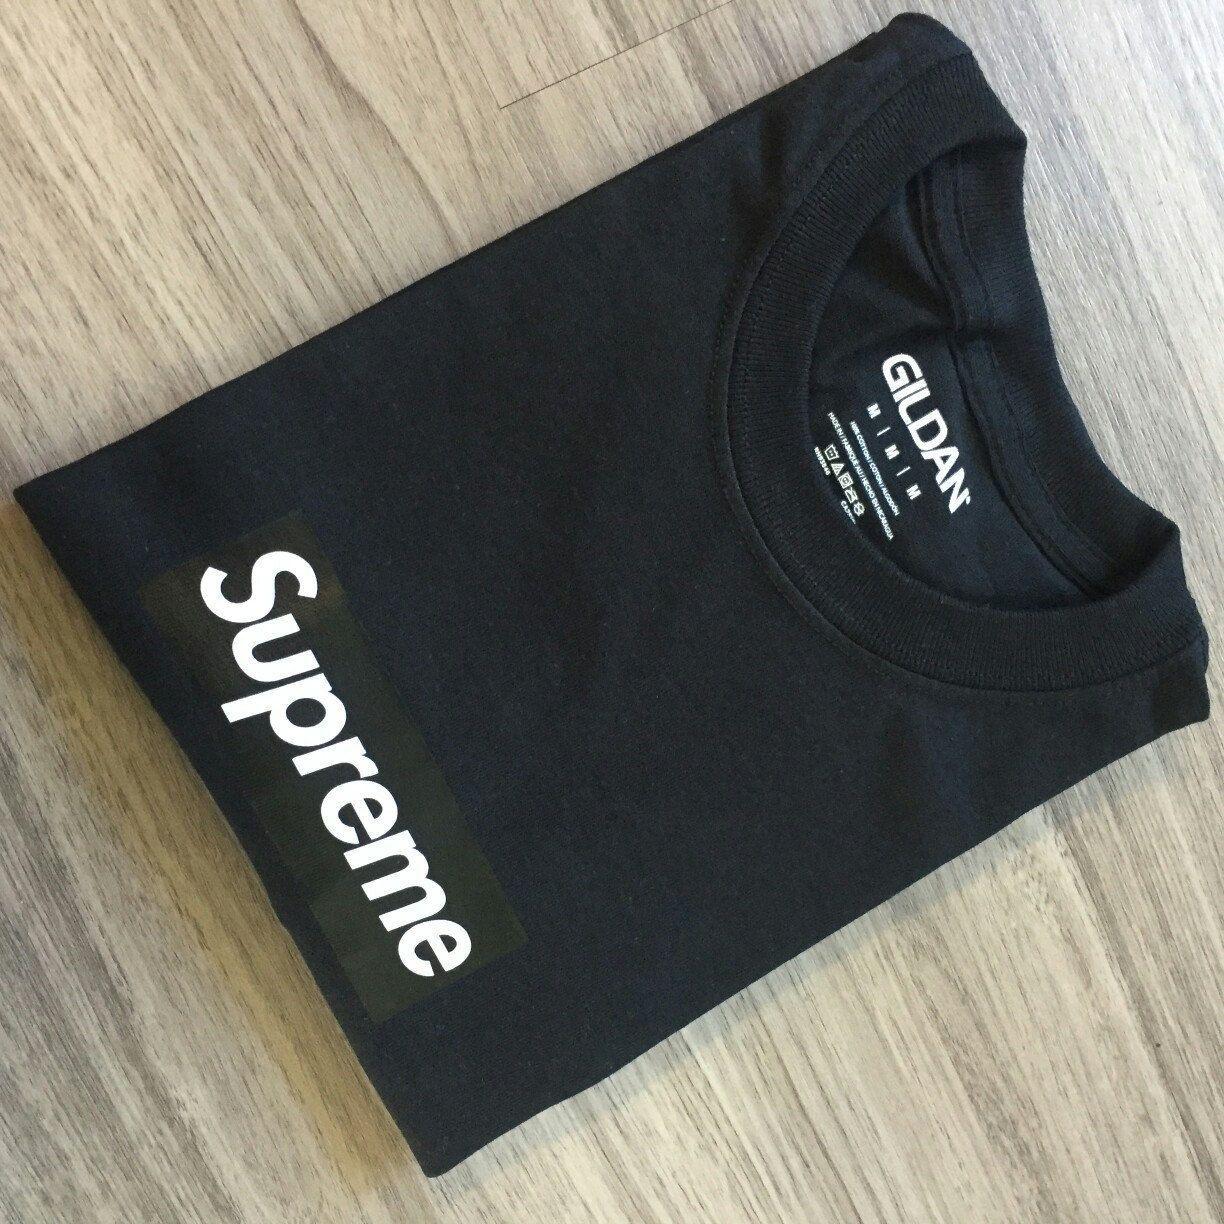 Clean Box Logo - Black on Black Supreme Box Logo tee looking clean! #supreme